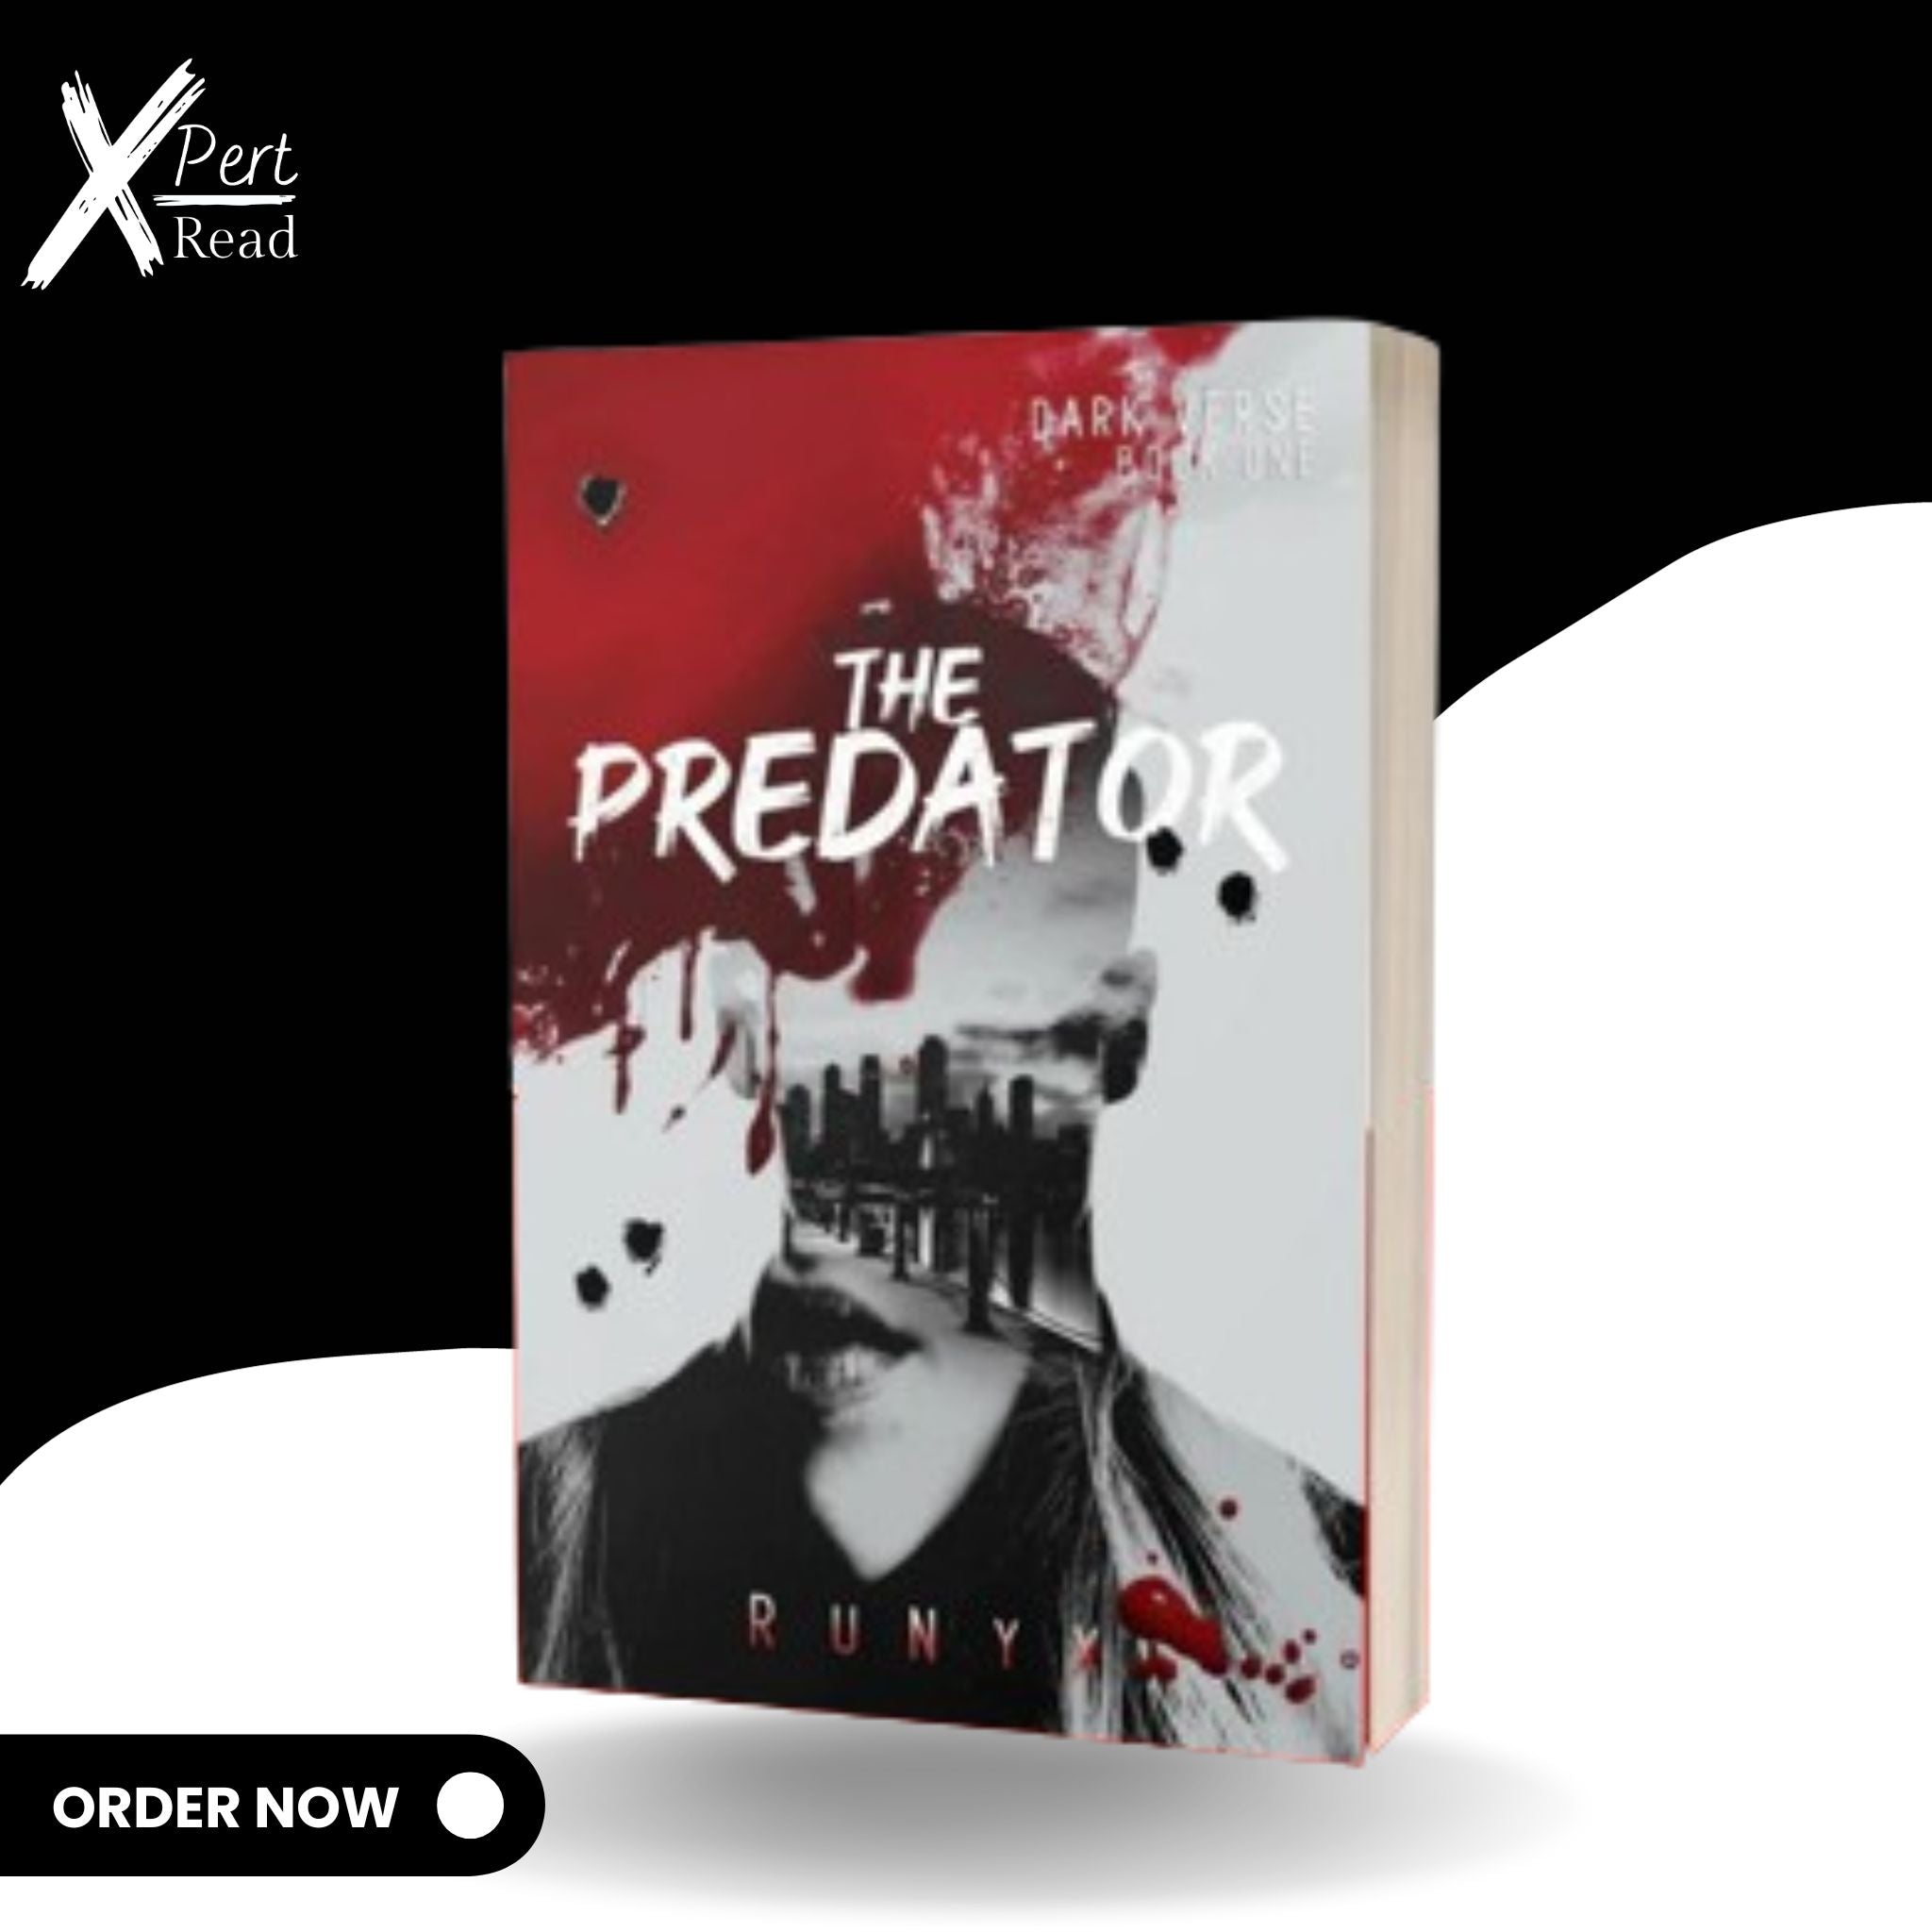 The Predator A Dark Contemporary Mafia Romance (DARK VERSE SERIES) By Runyx